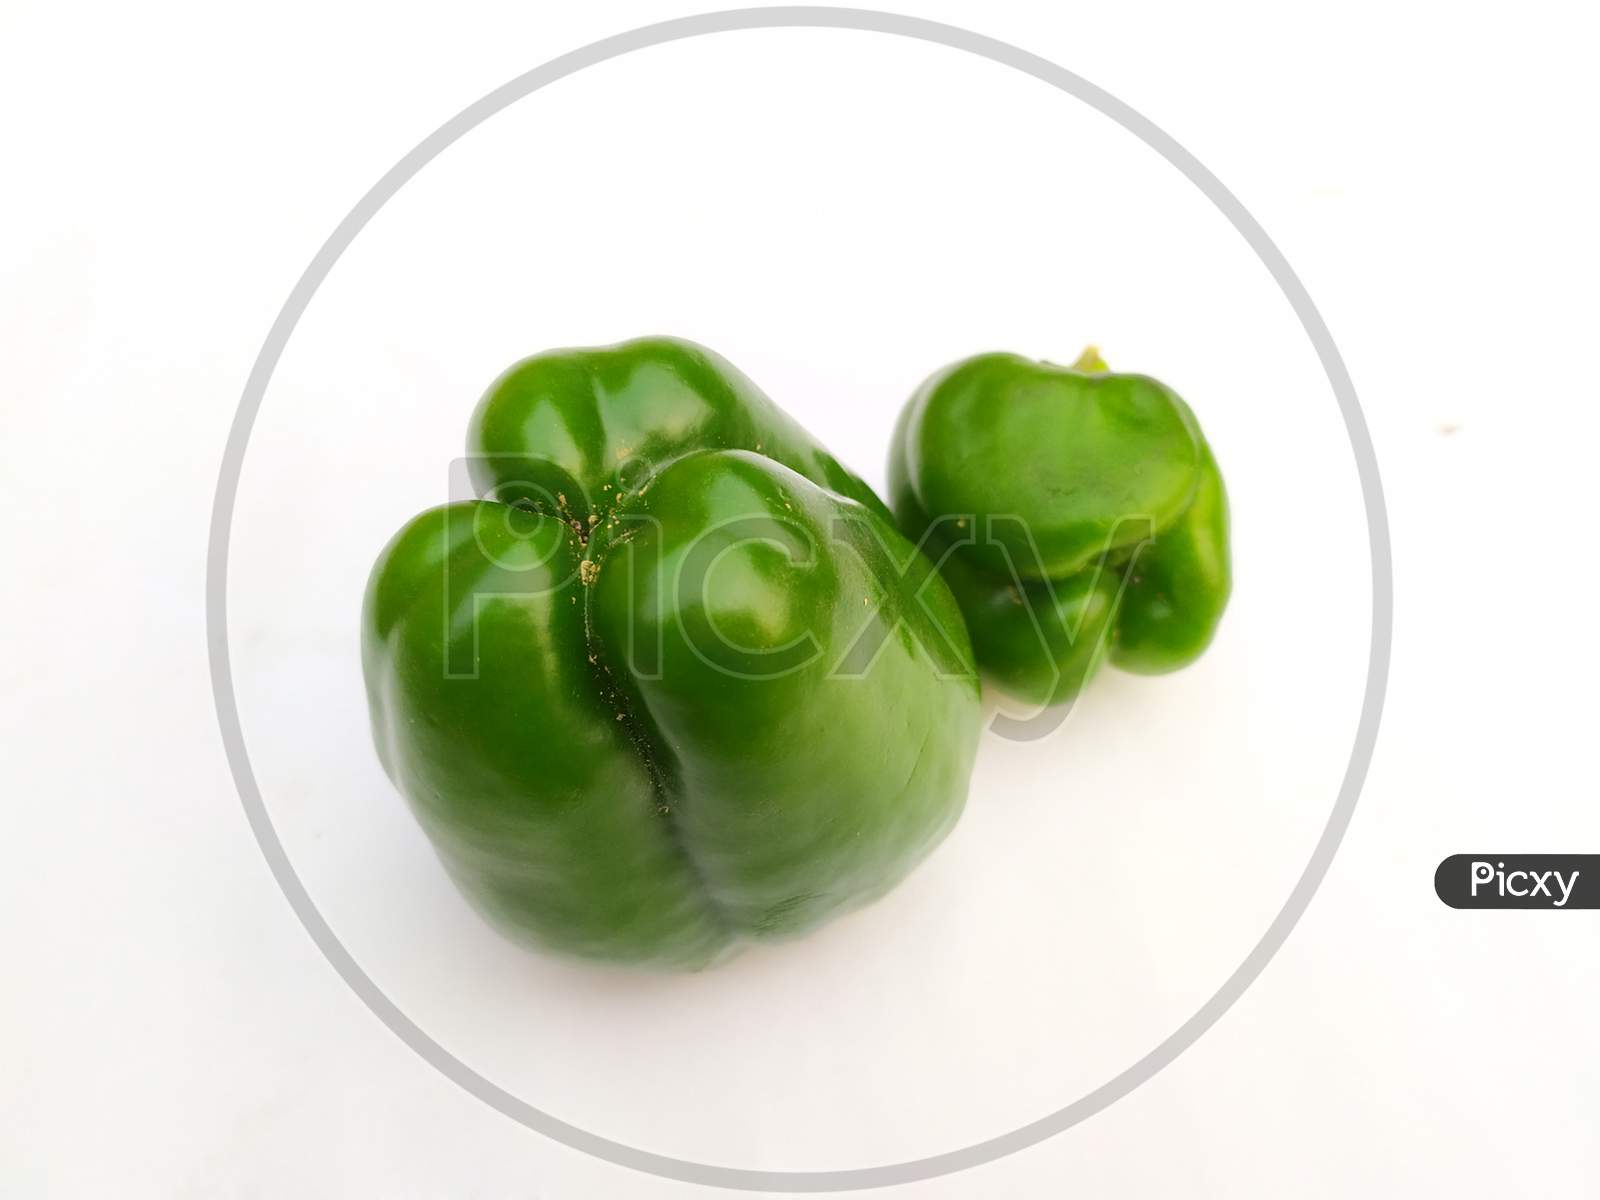 fresh green bell pepper (capsicum)isolated on white background